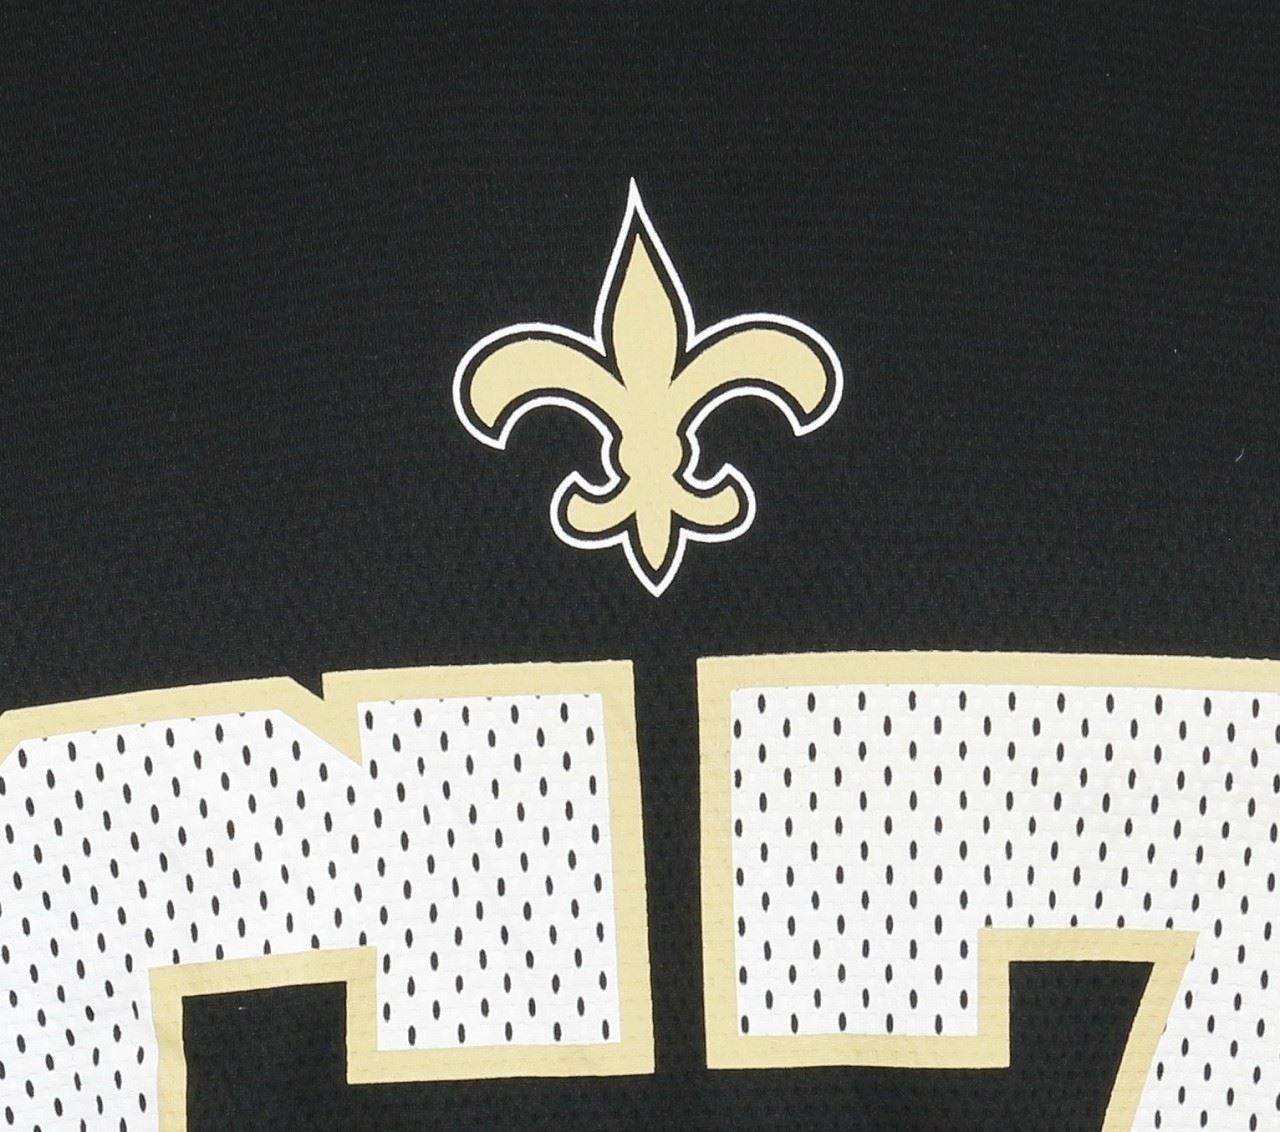 New Orleans Saints NFL Supporters T-Shirt New Era